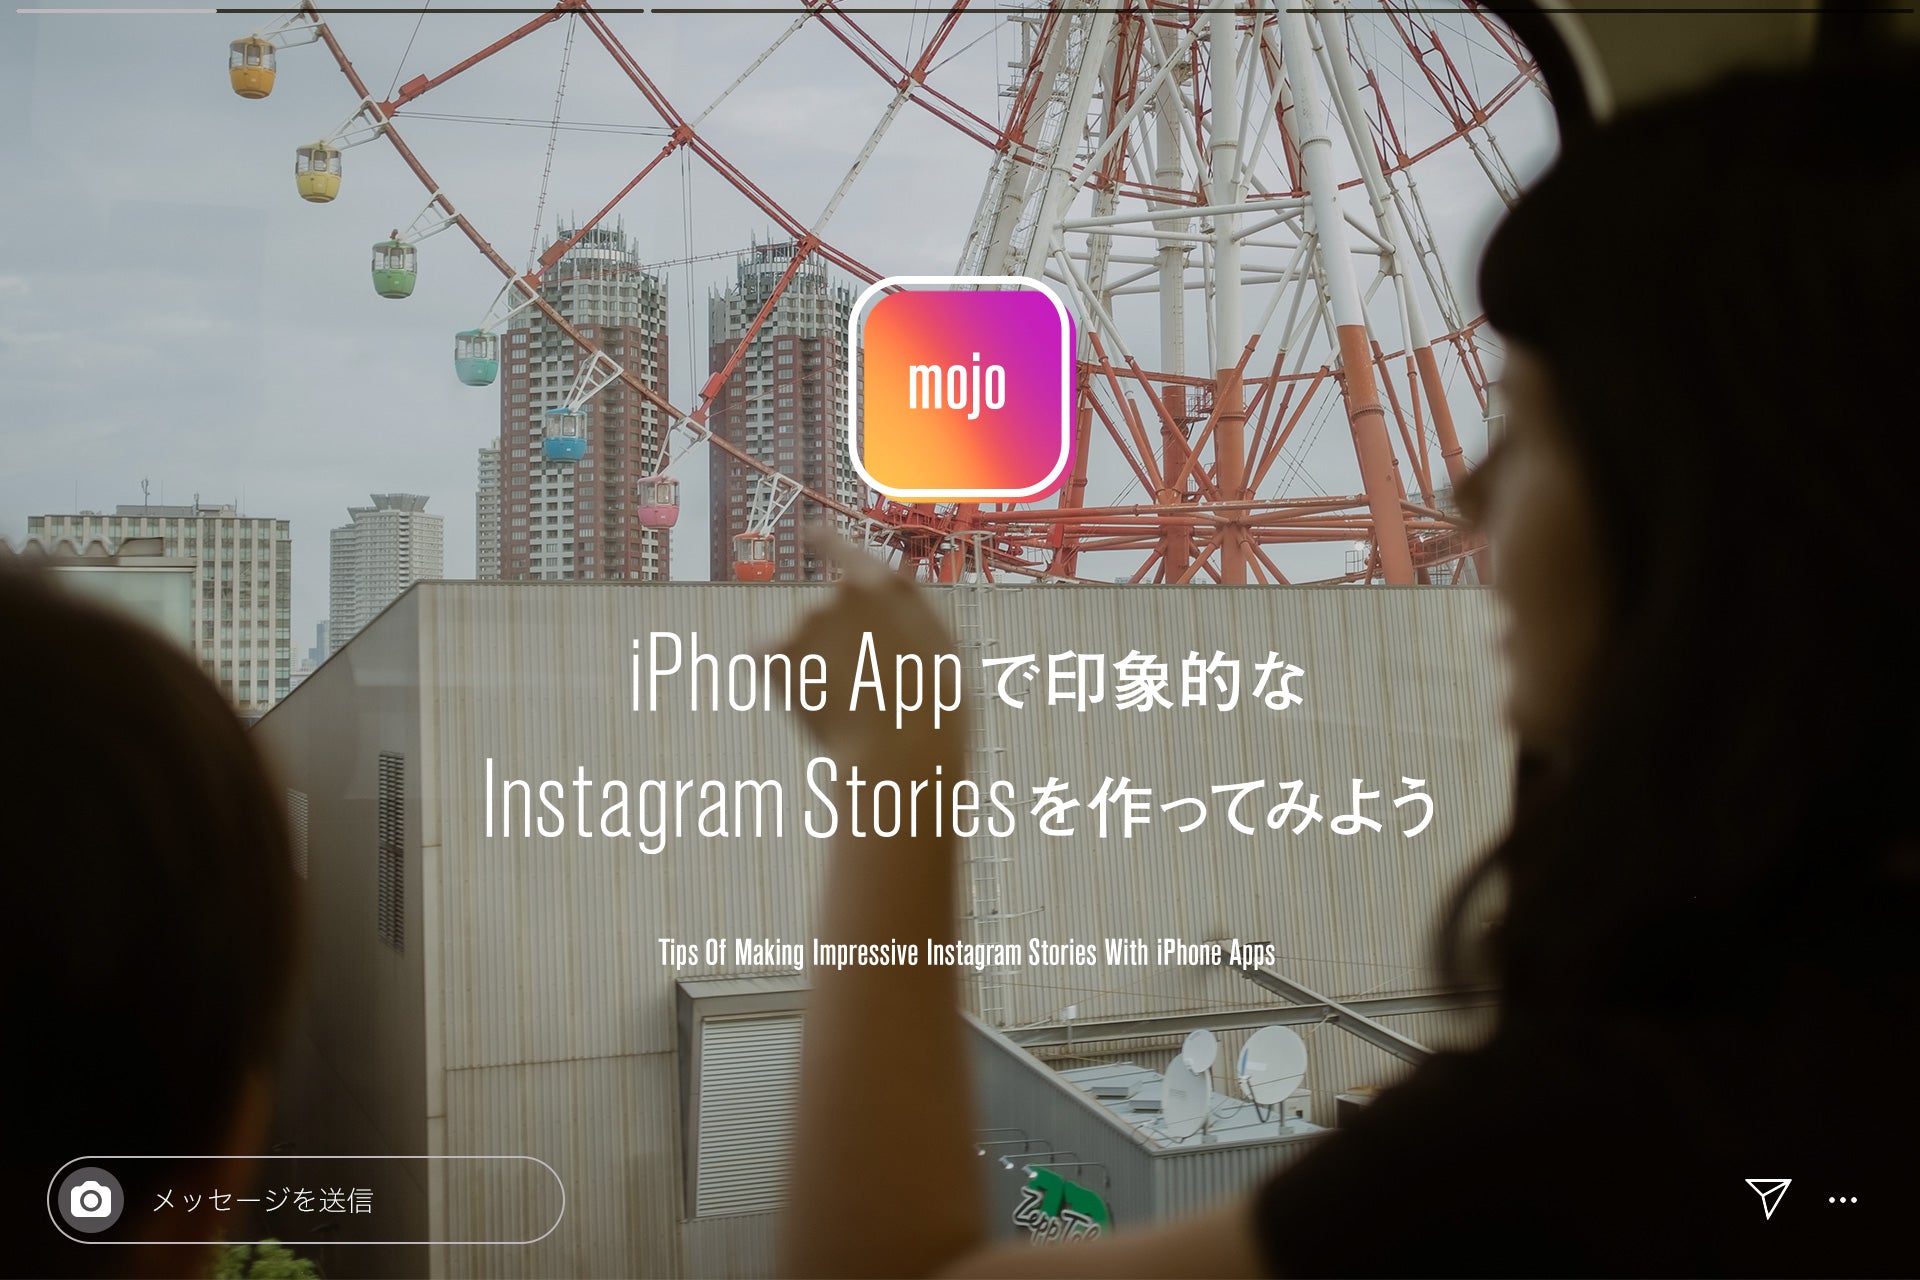 iPhone Appで印象的な<br />Instagram Storiesを<br />作ってみよう<br />"mojo"